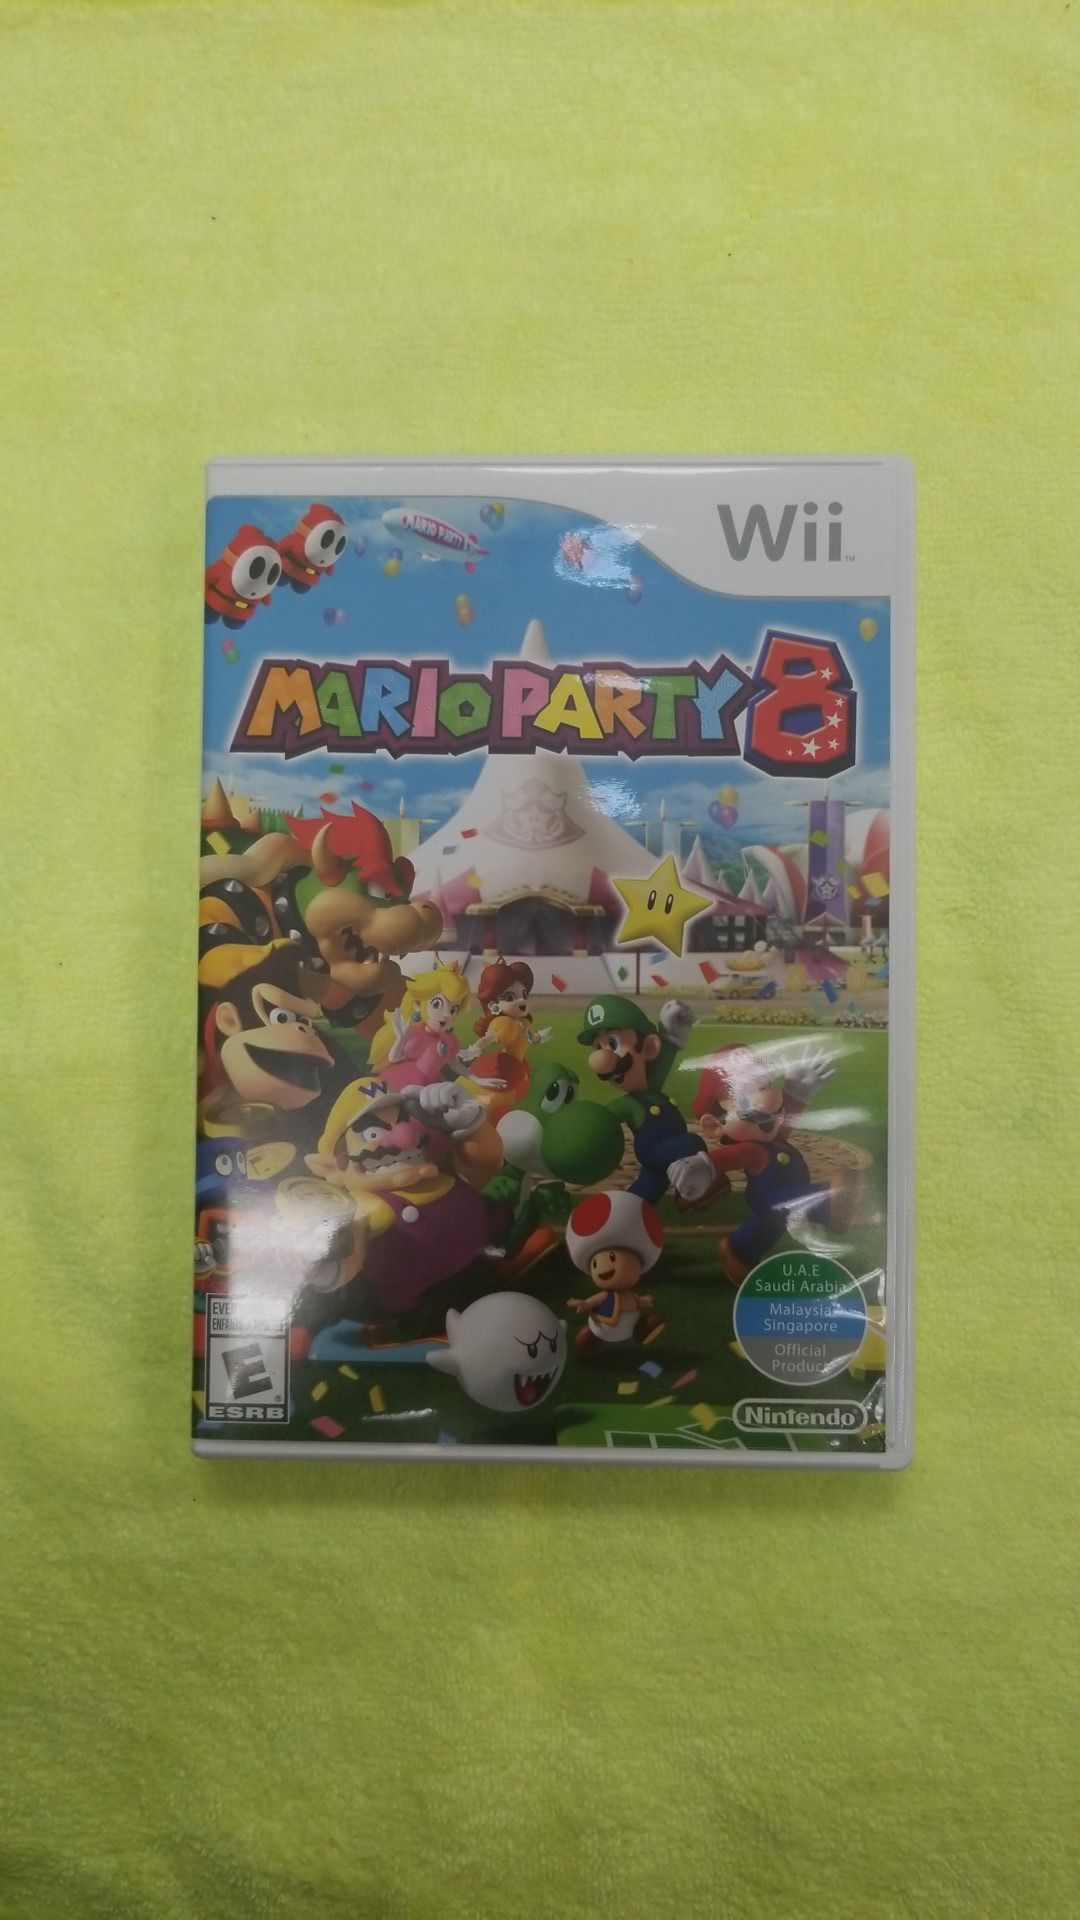 Nintendo Wii Mario Party 8 Great Condition With Case